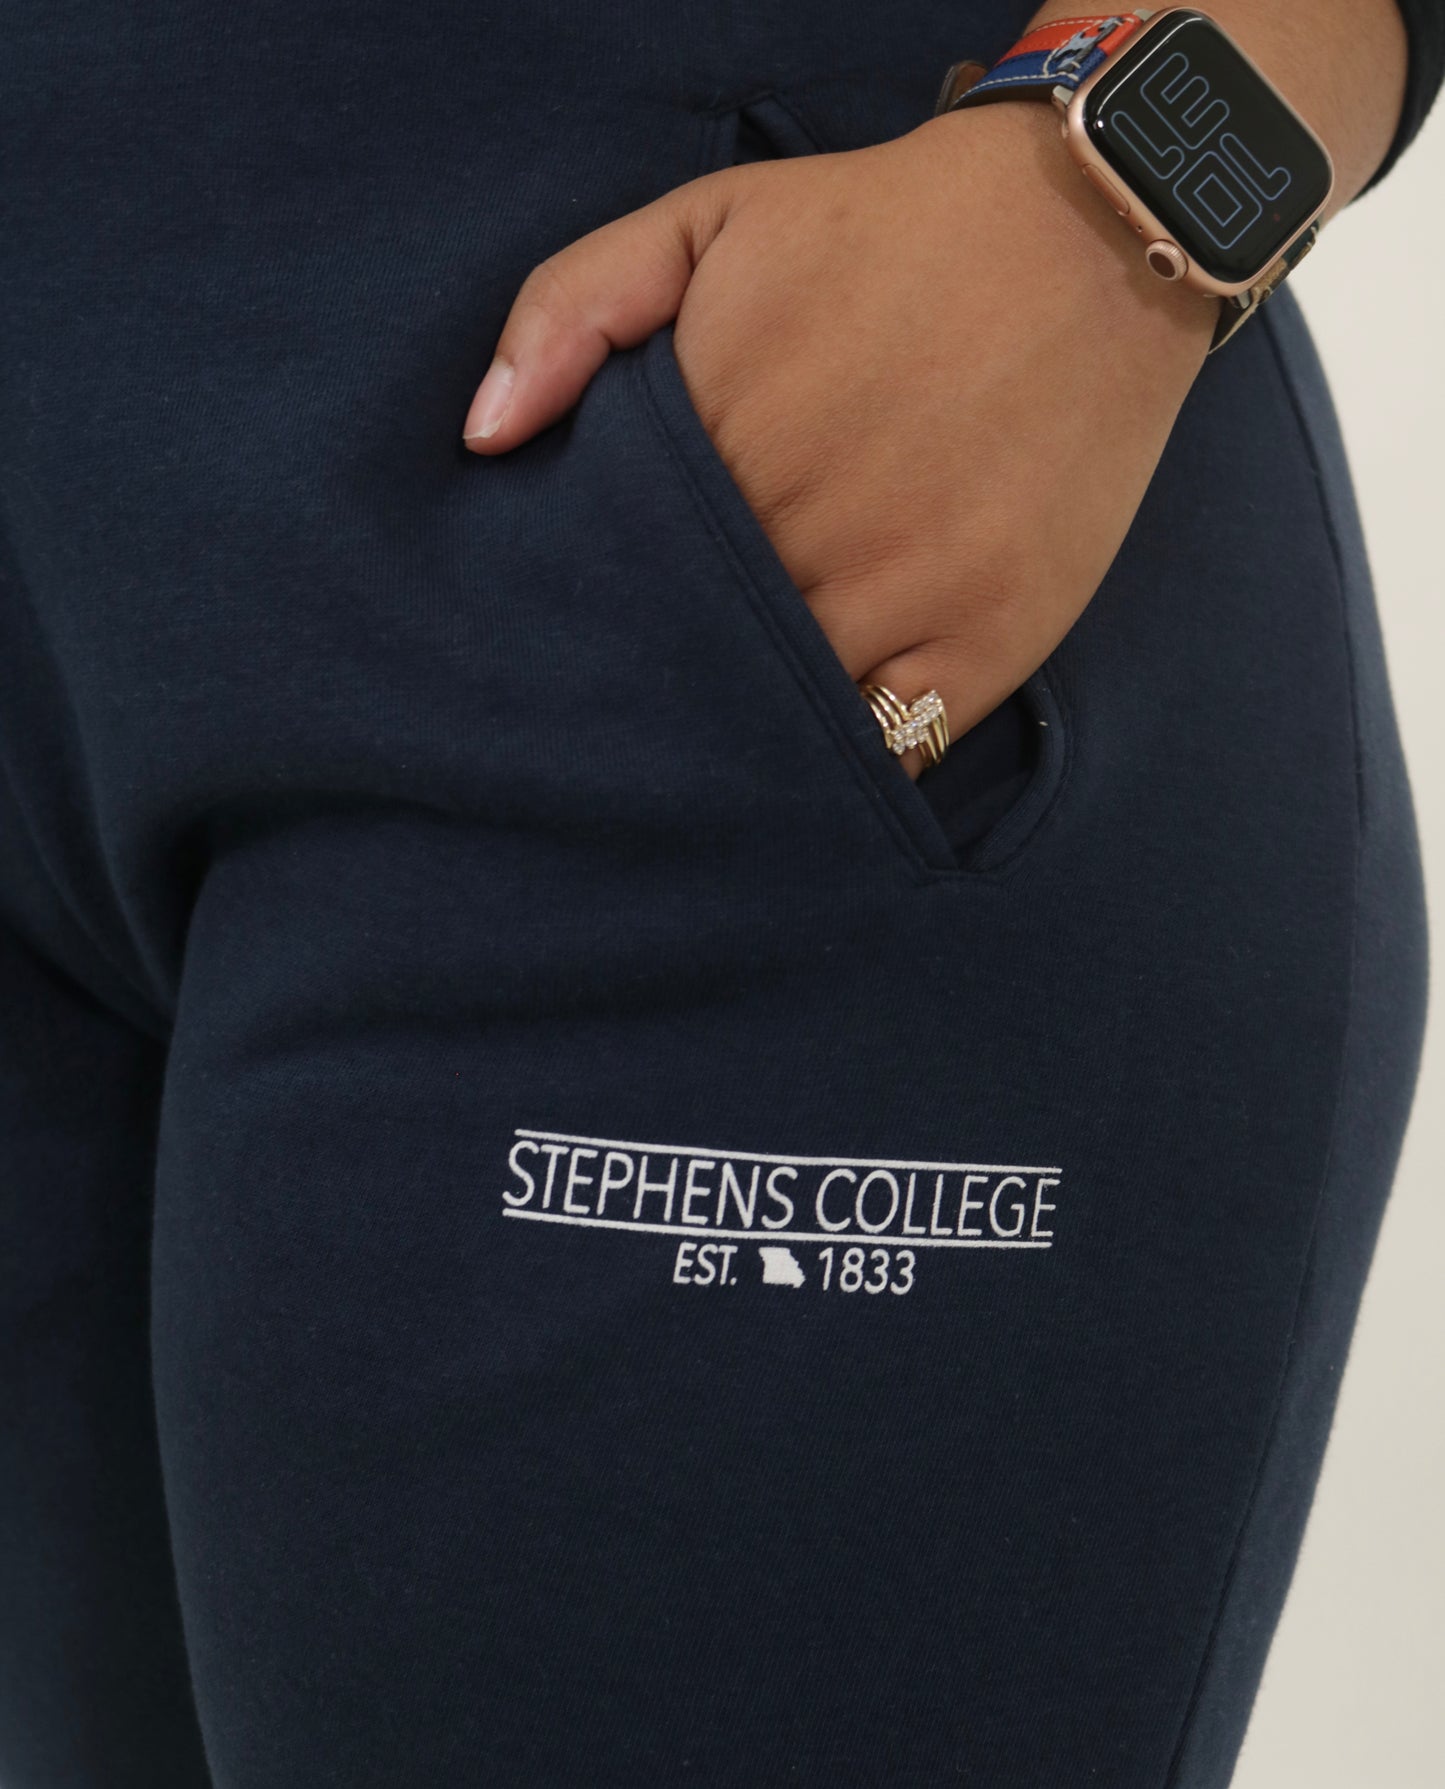 Stephens College Sweatpants